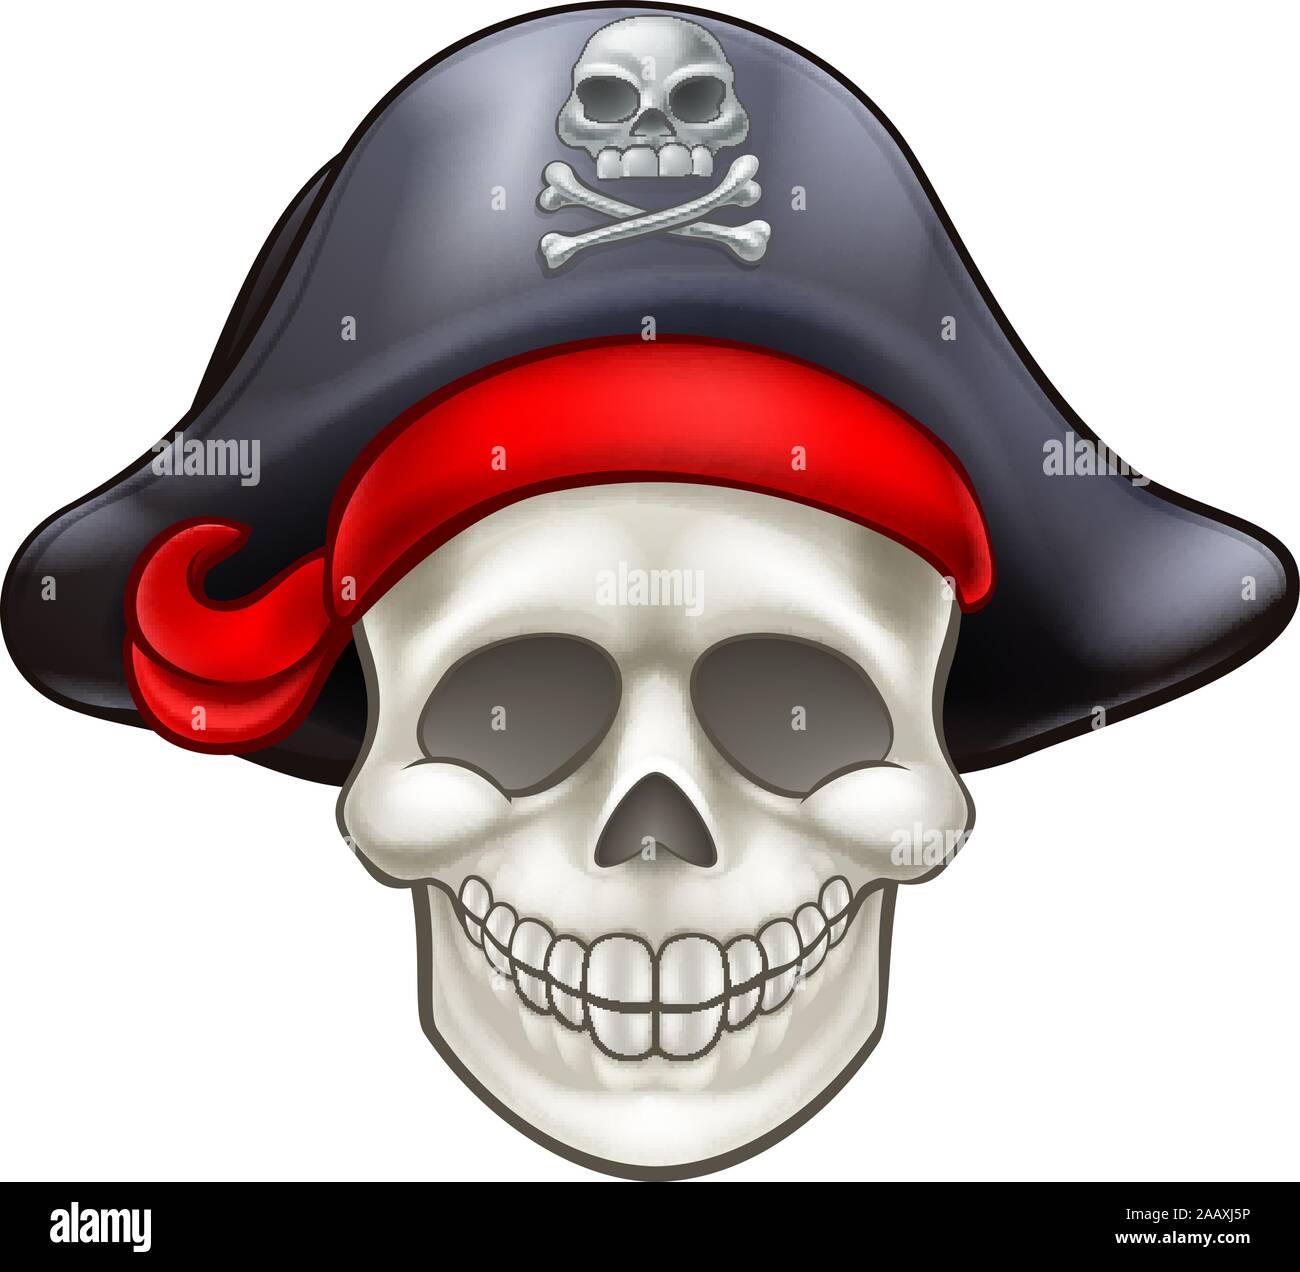 Dessin Animé Pirate crâne Illustration de Vecteur